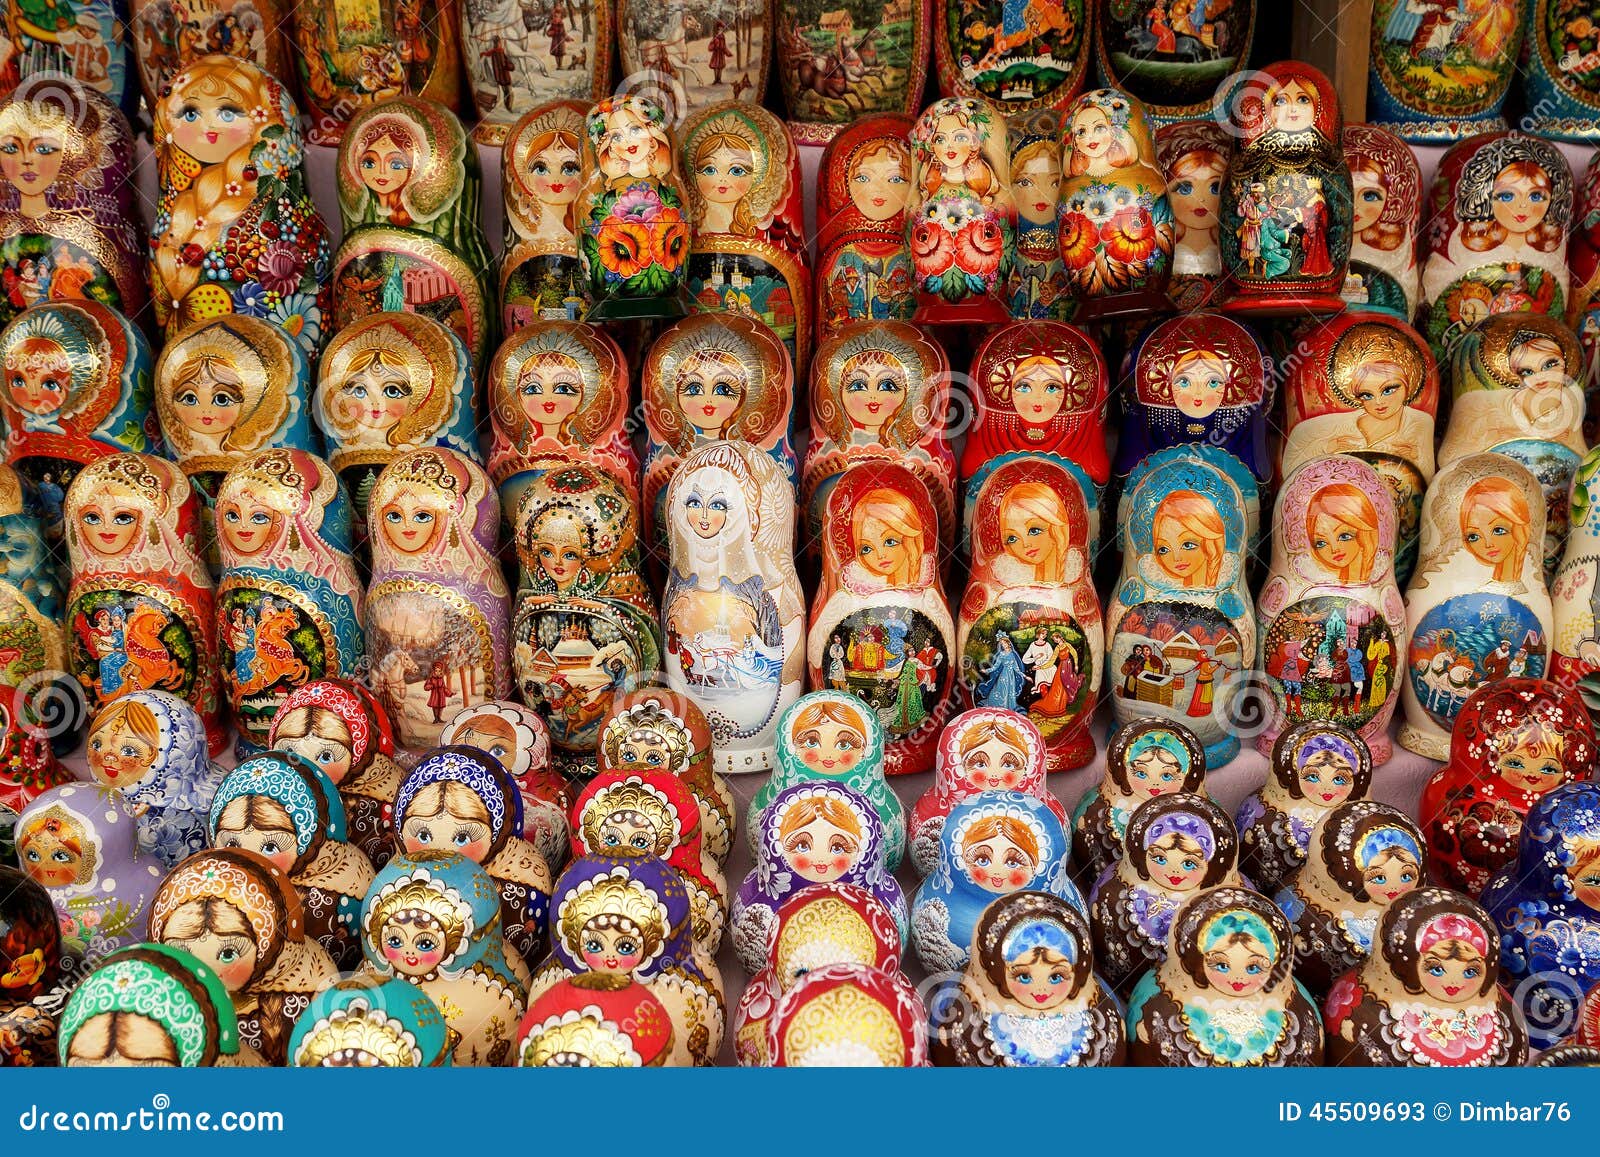 a lot of russian nesting dolls